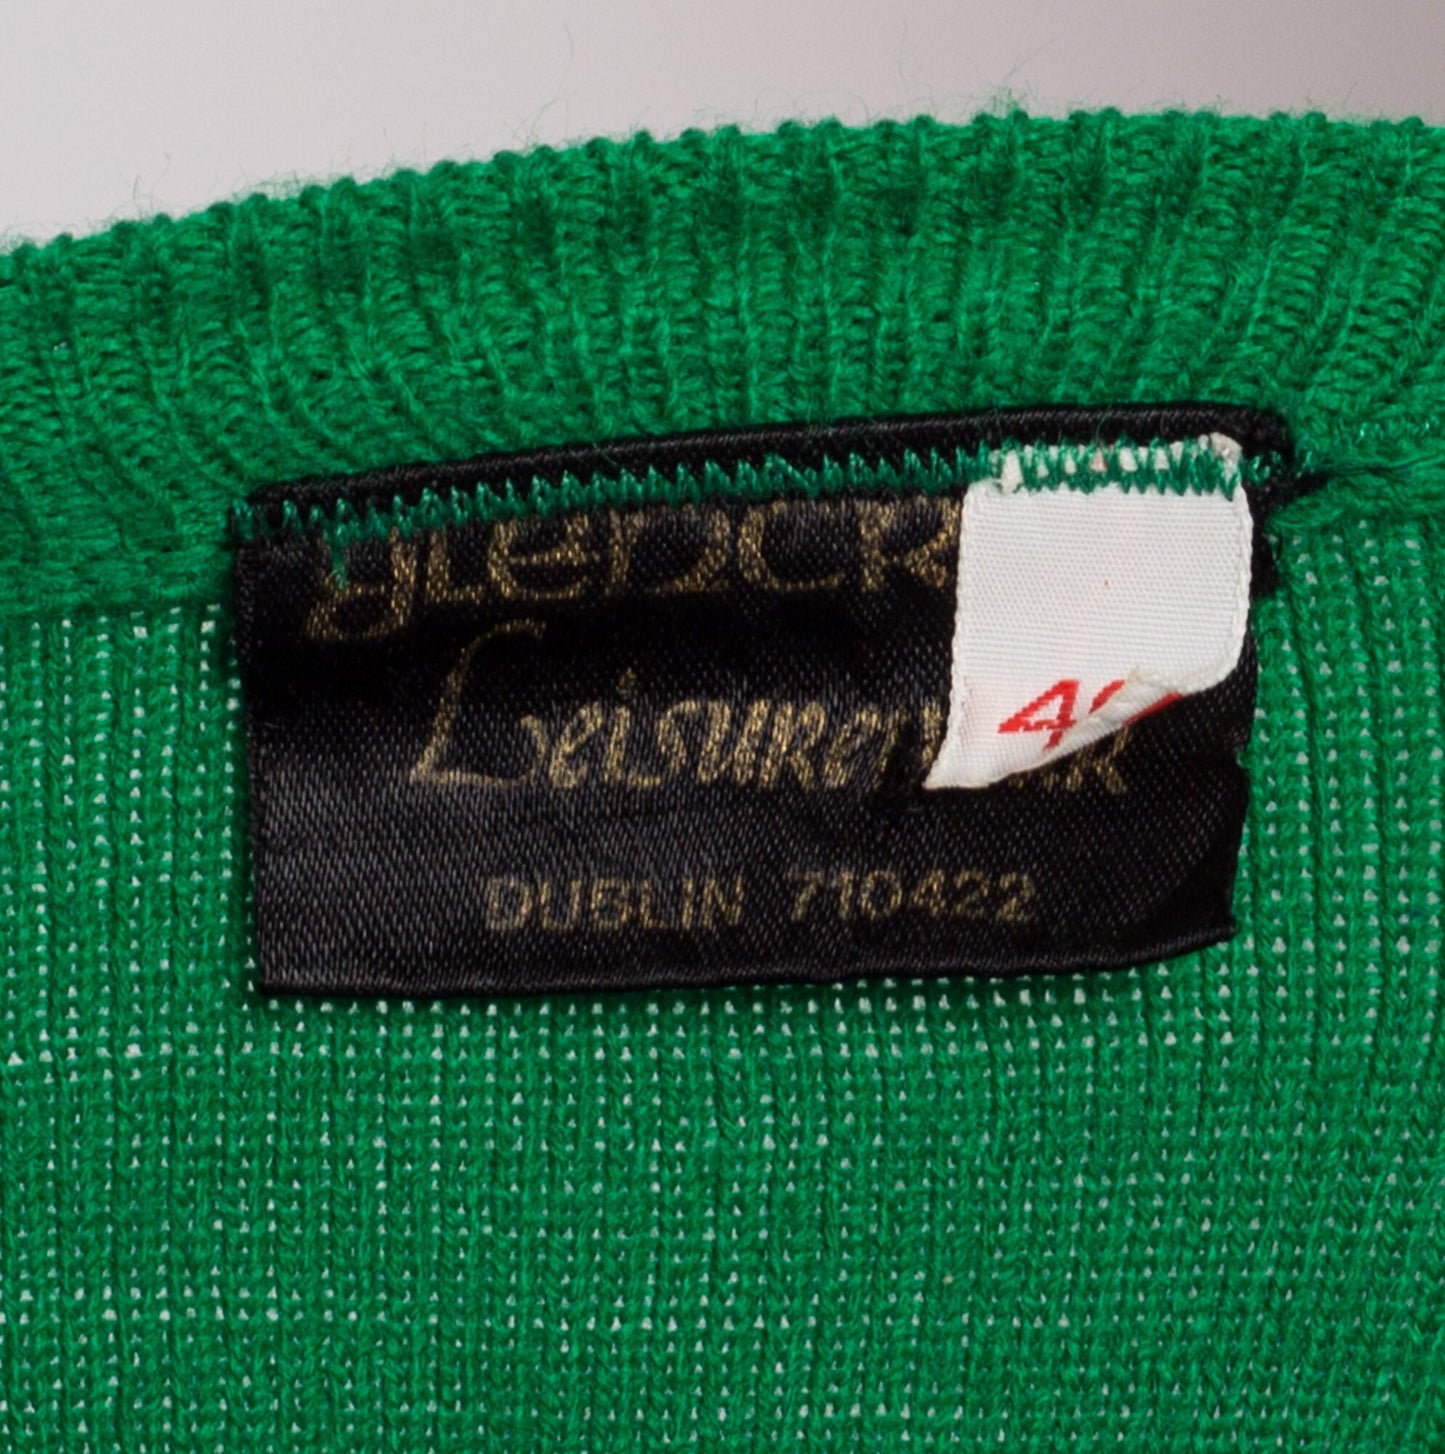 M| 80s Ireland Sweater - Men's Medium | Vintage Irish Green Knit St. Patrick's Day Souvenir Pullover